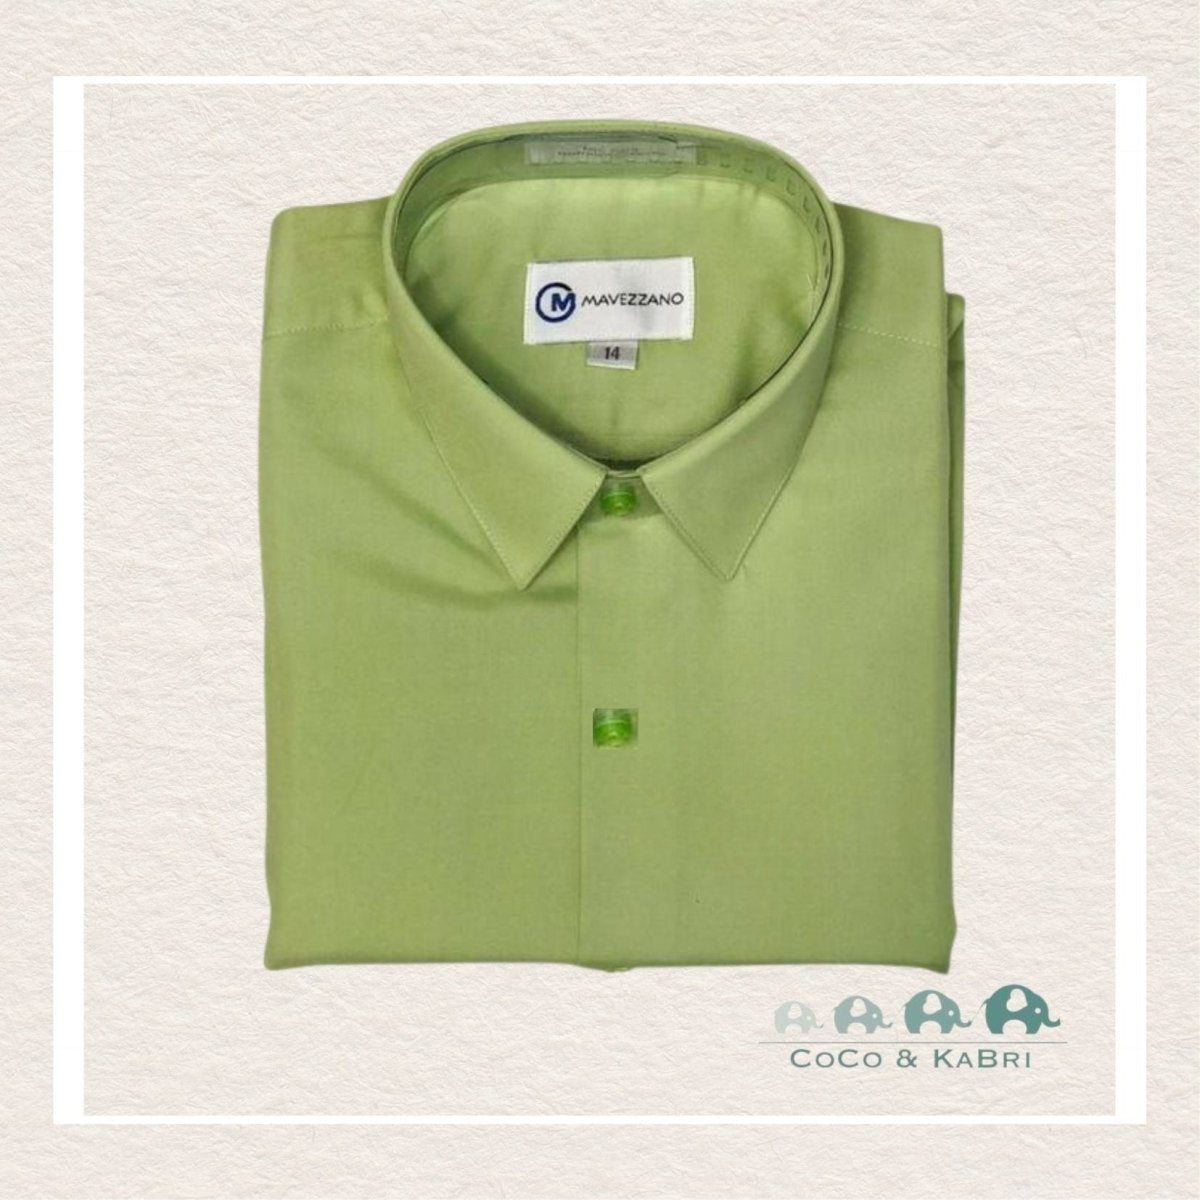 Mavezzano Dress Shirt: Sage Green, CoCo & KaBri Children's Boutique